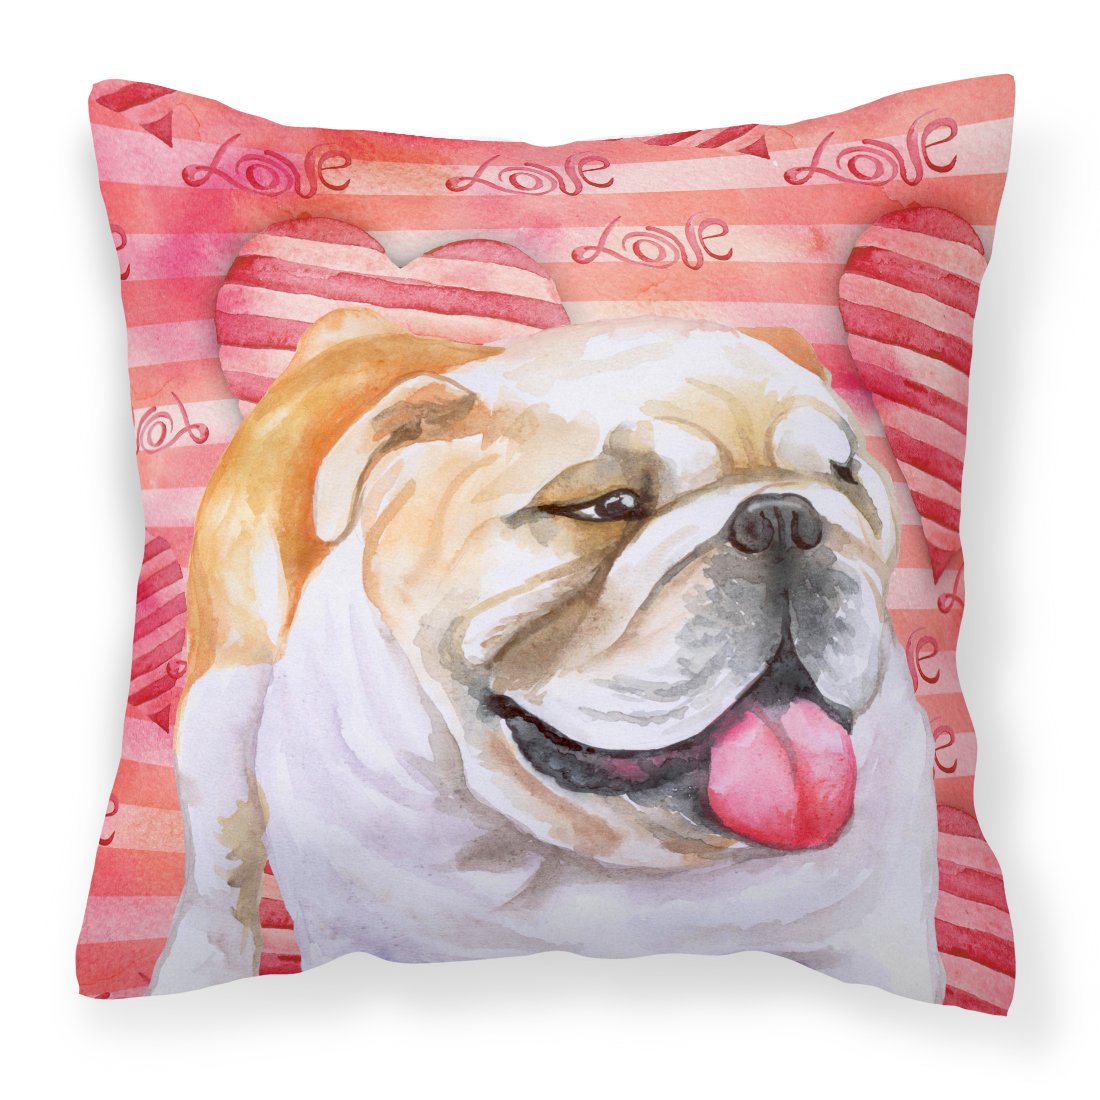 English Bulldog Love Fabric Decorative Pillow BB9726PW1818 by Caroline's Treasures